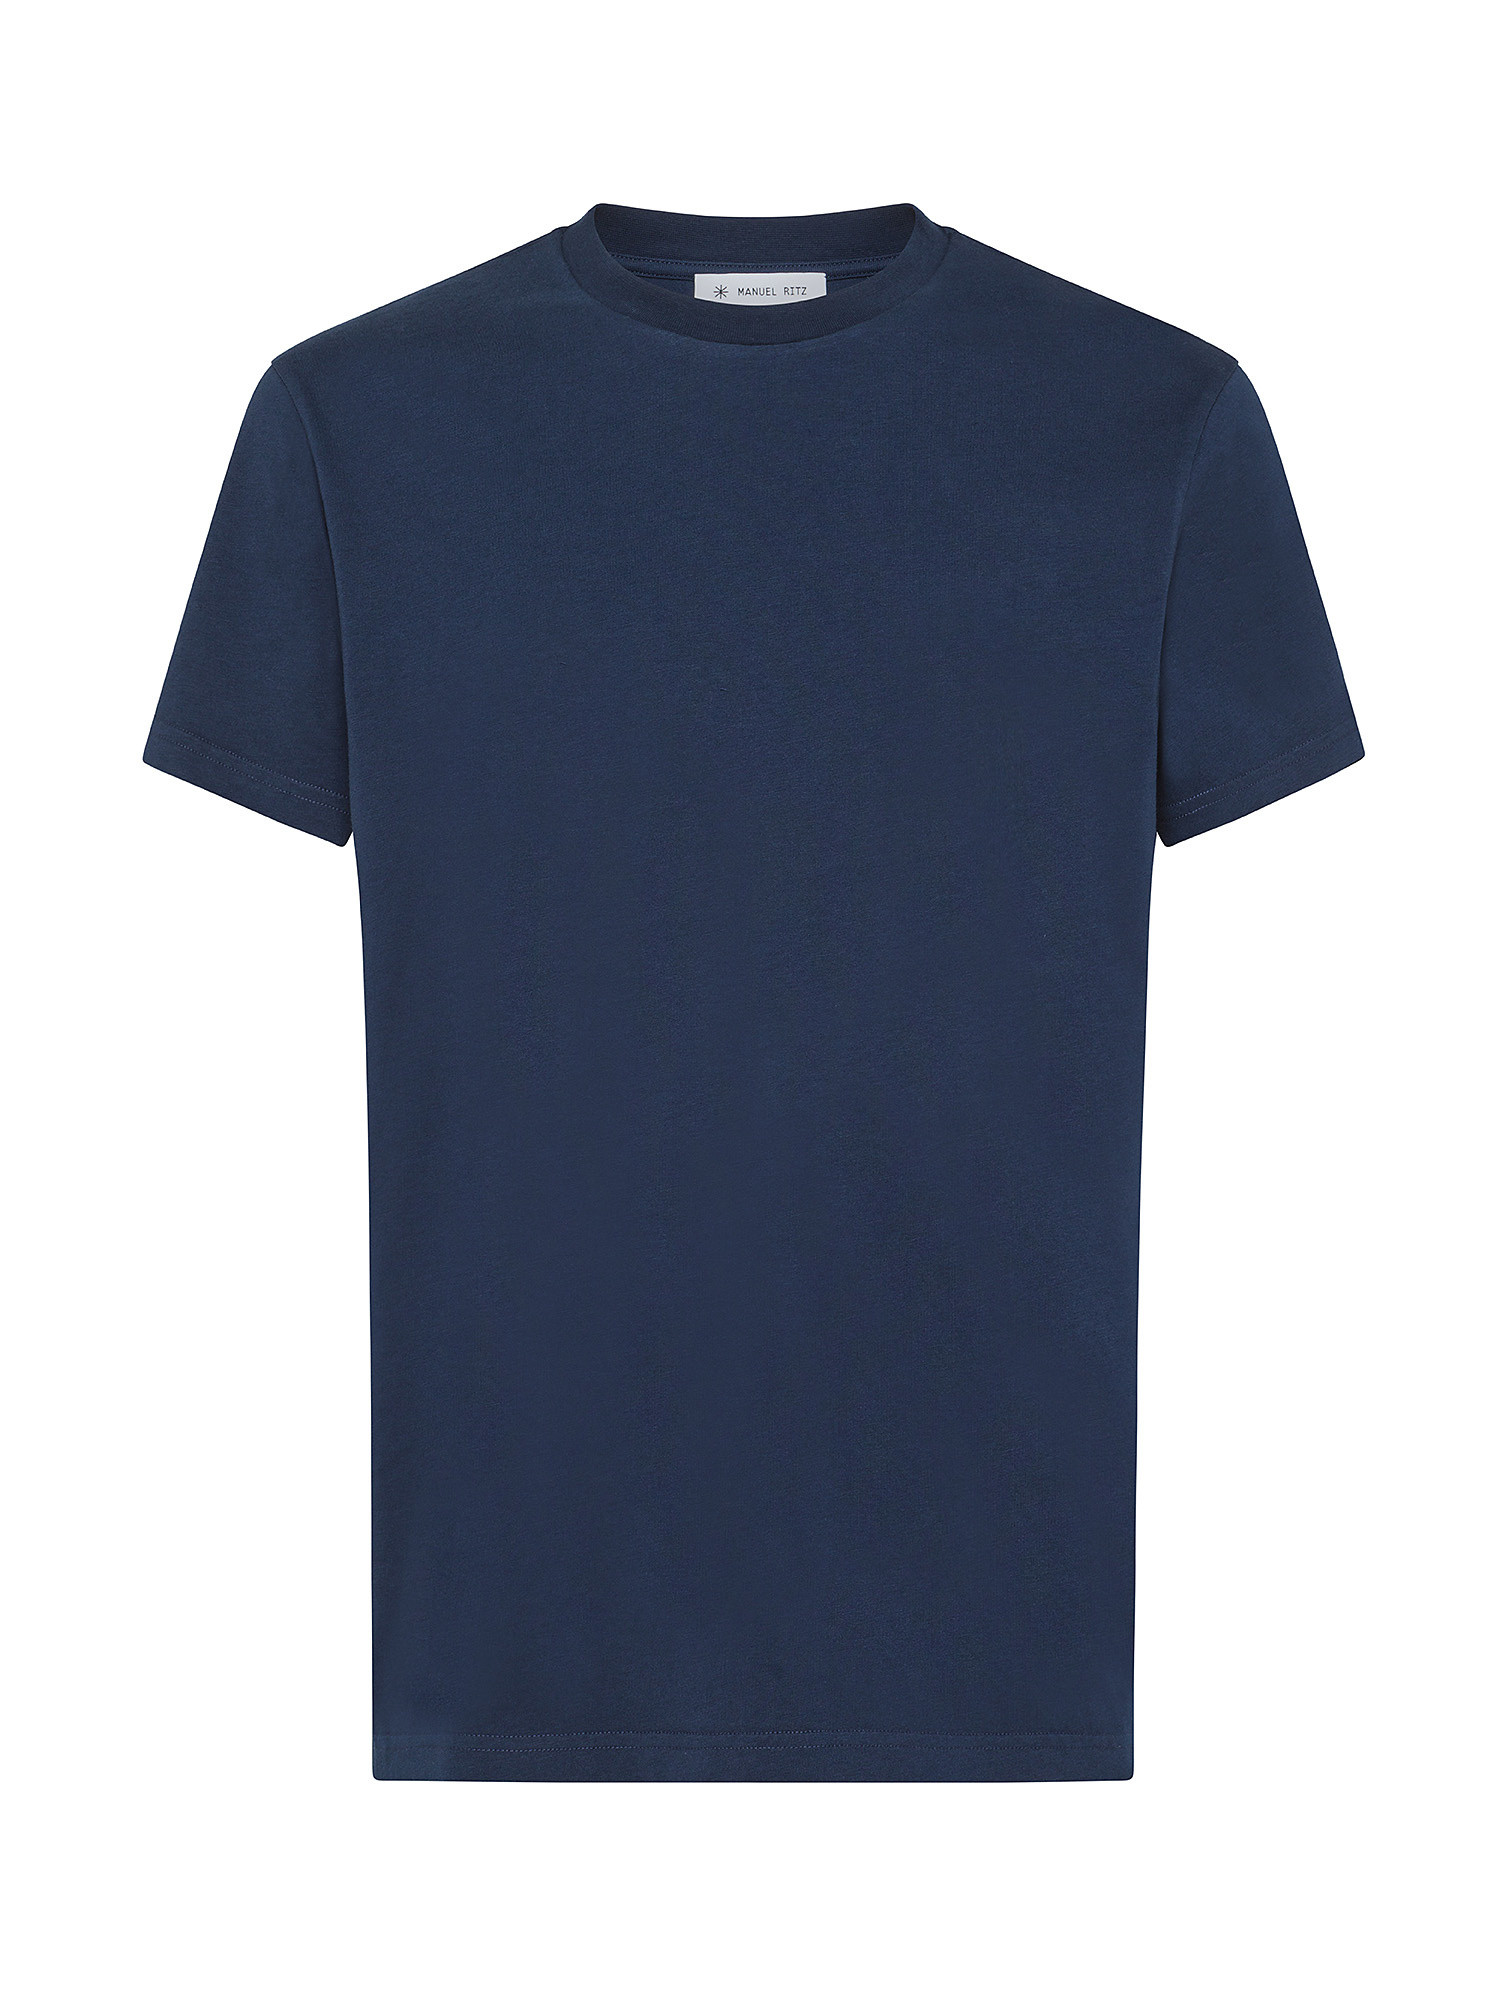 Manuel Ritz - Cotton T-shirt, Dark Blue, large image number 0